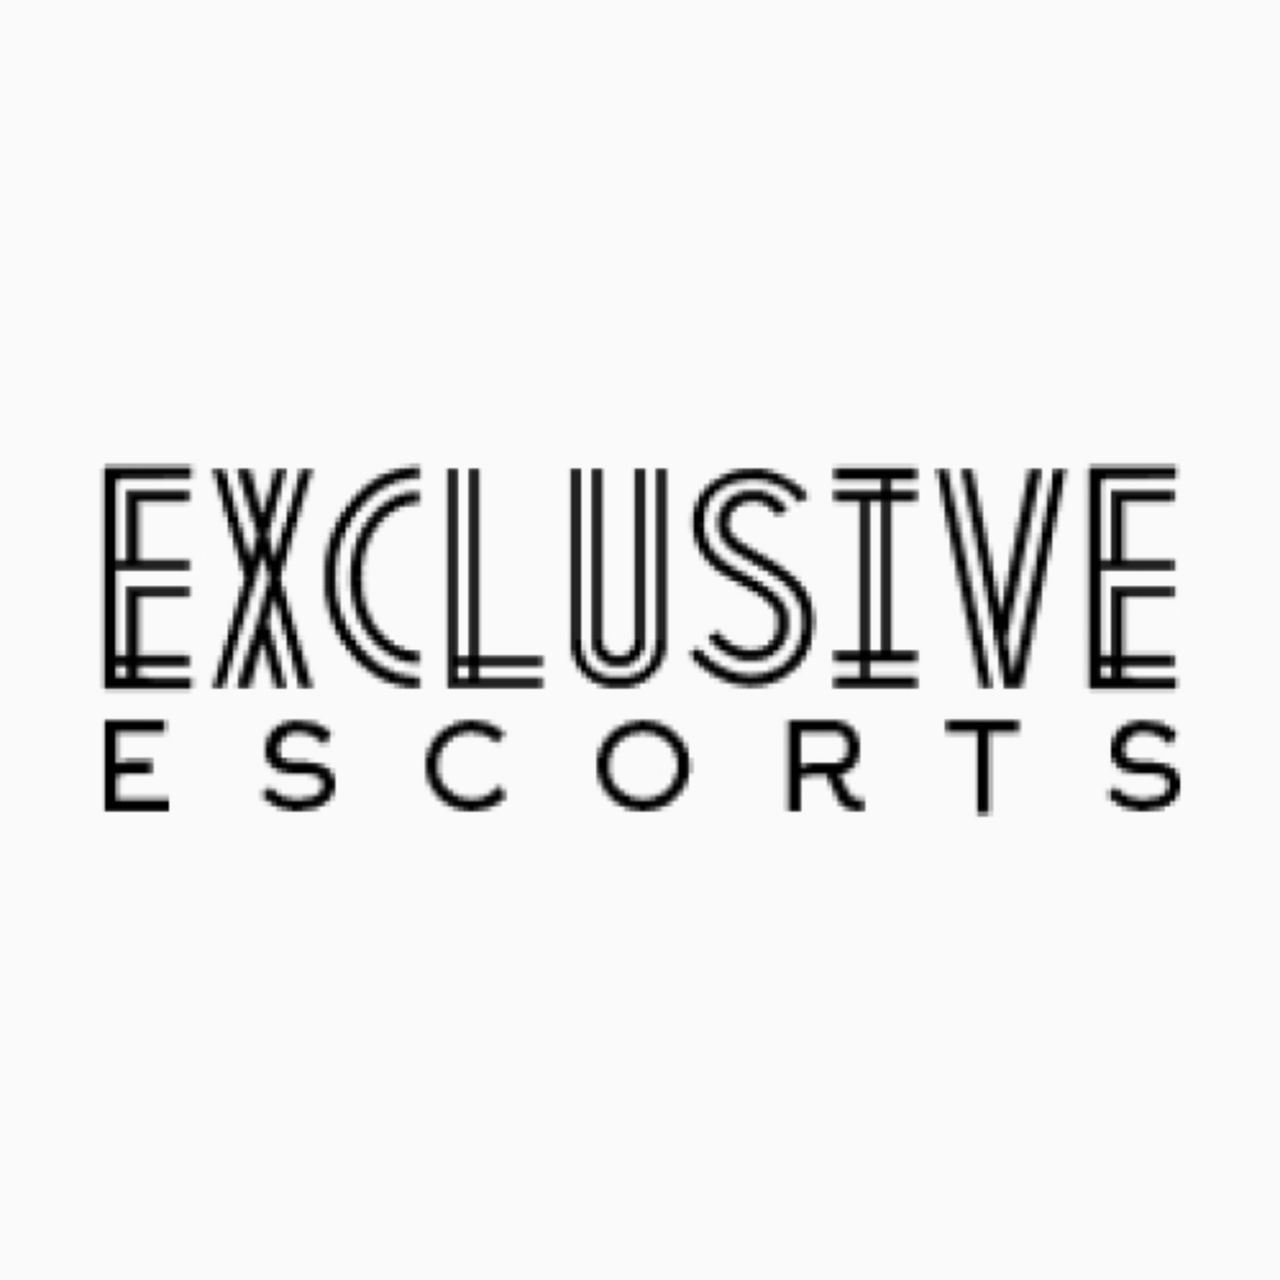 Exclusive Escorts